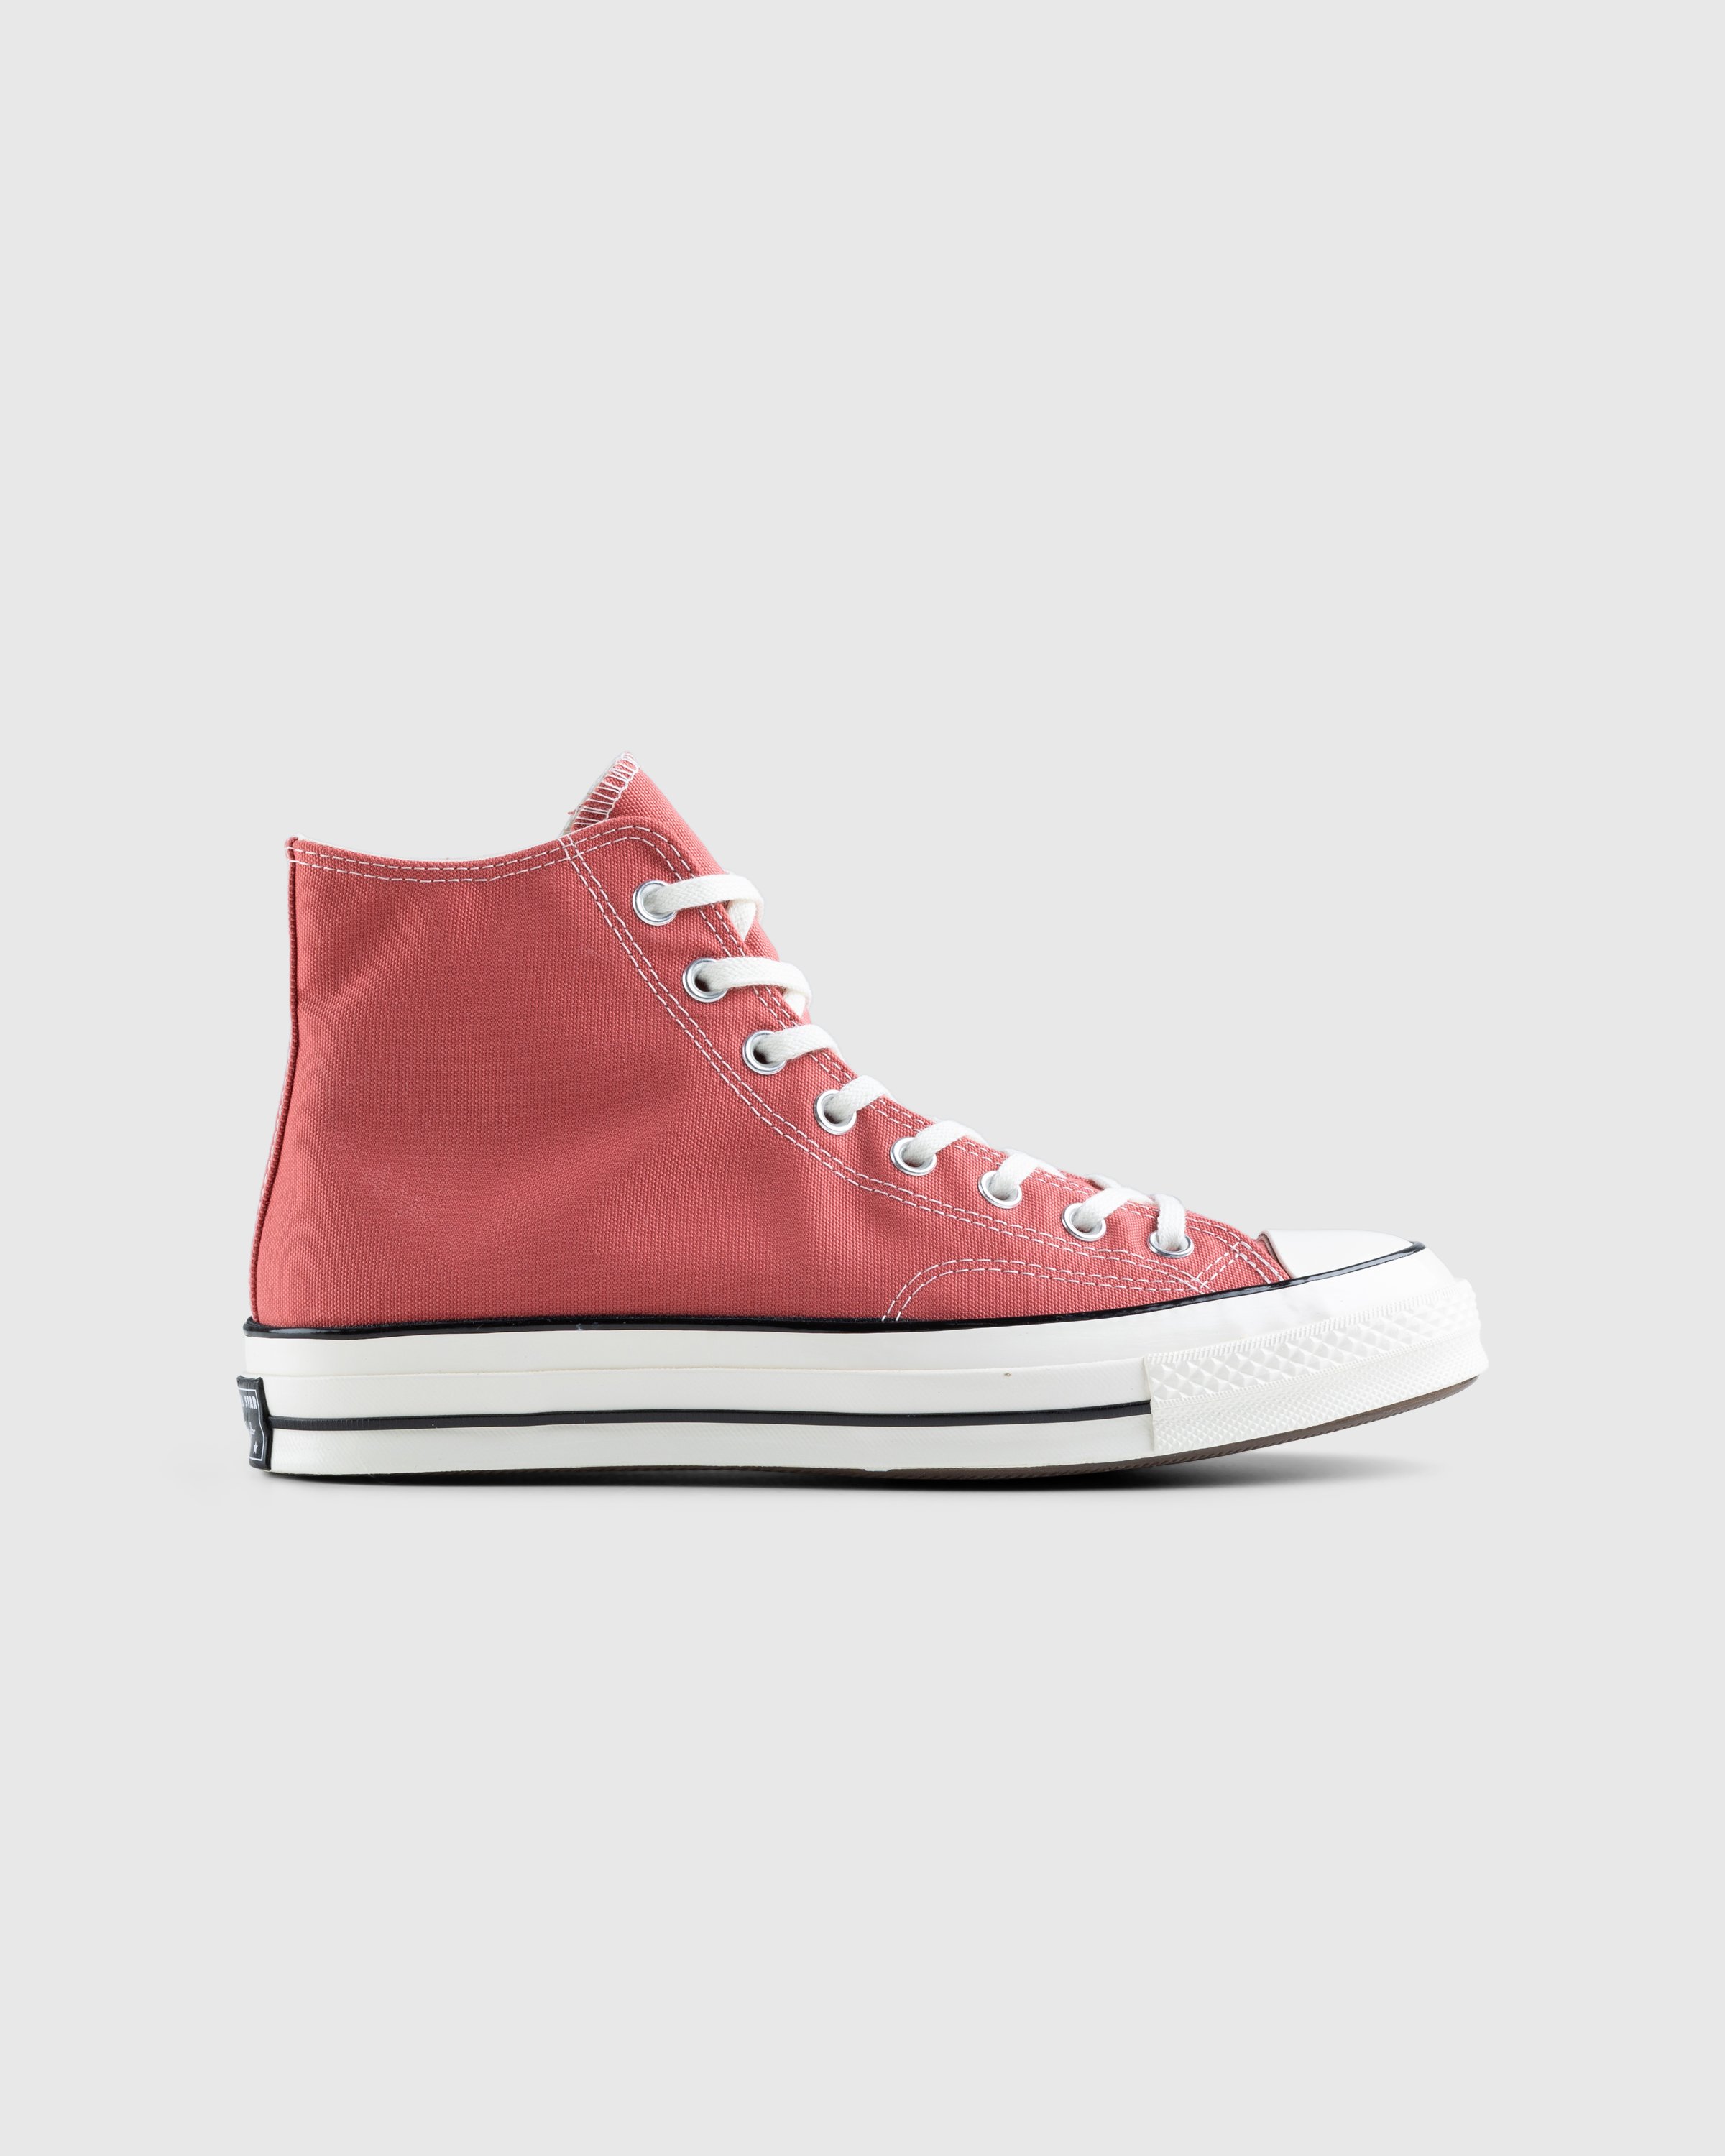 Converse - Chuck 70 HI Rhubarb Pie/Egret/Black - Footwear - Red - Image 1